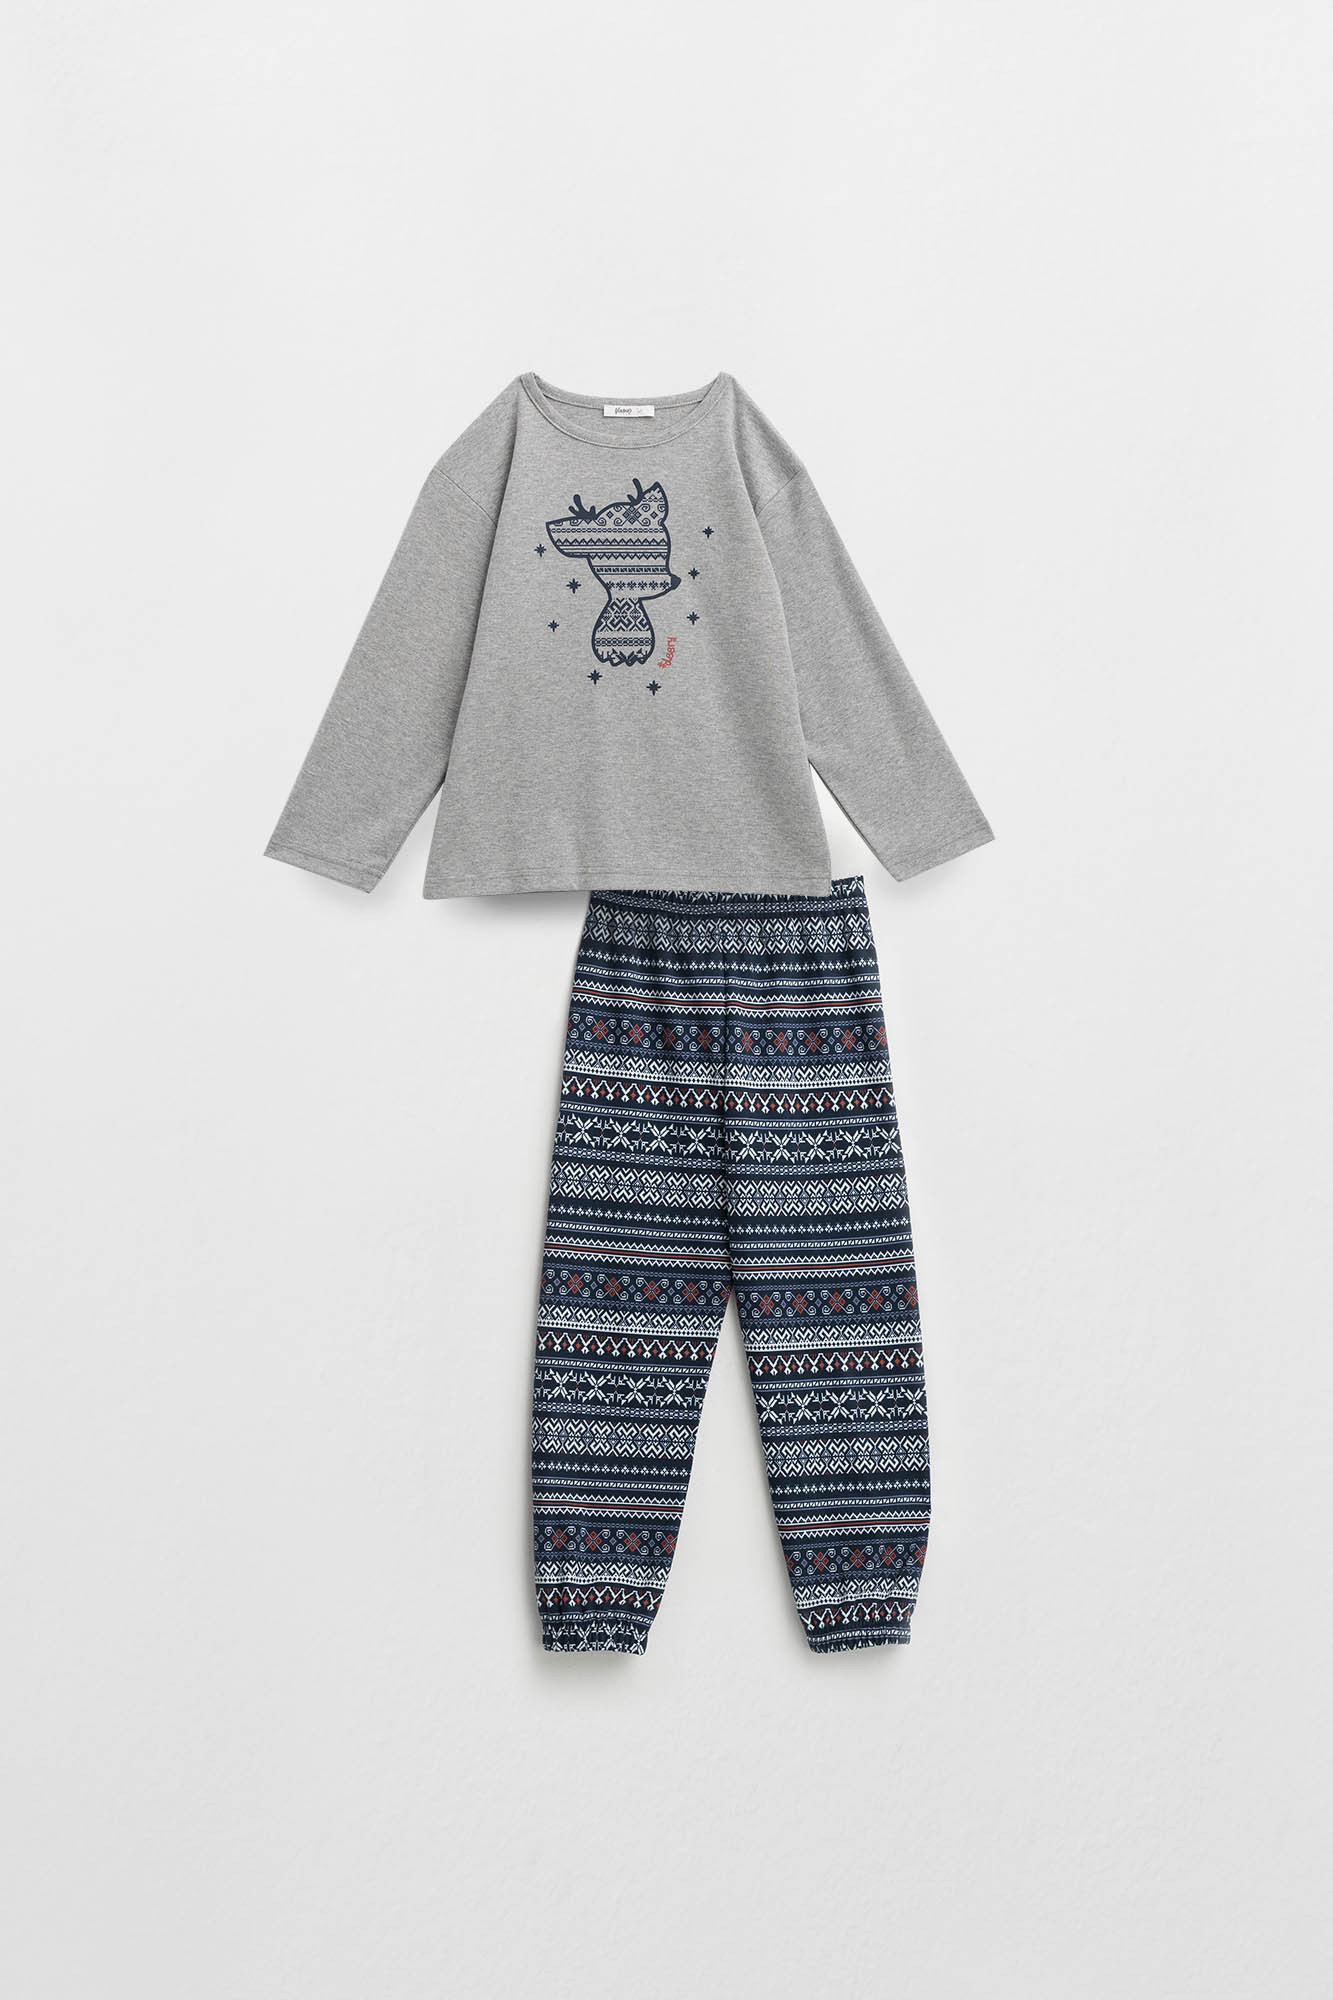 Vamp - Dvoudílné dětské pyžamo - Darby 17576 - Vamp gray melange 6